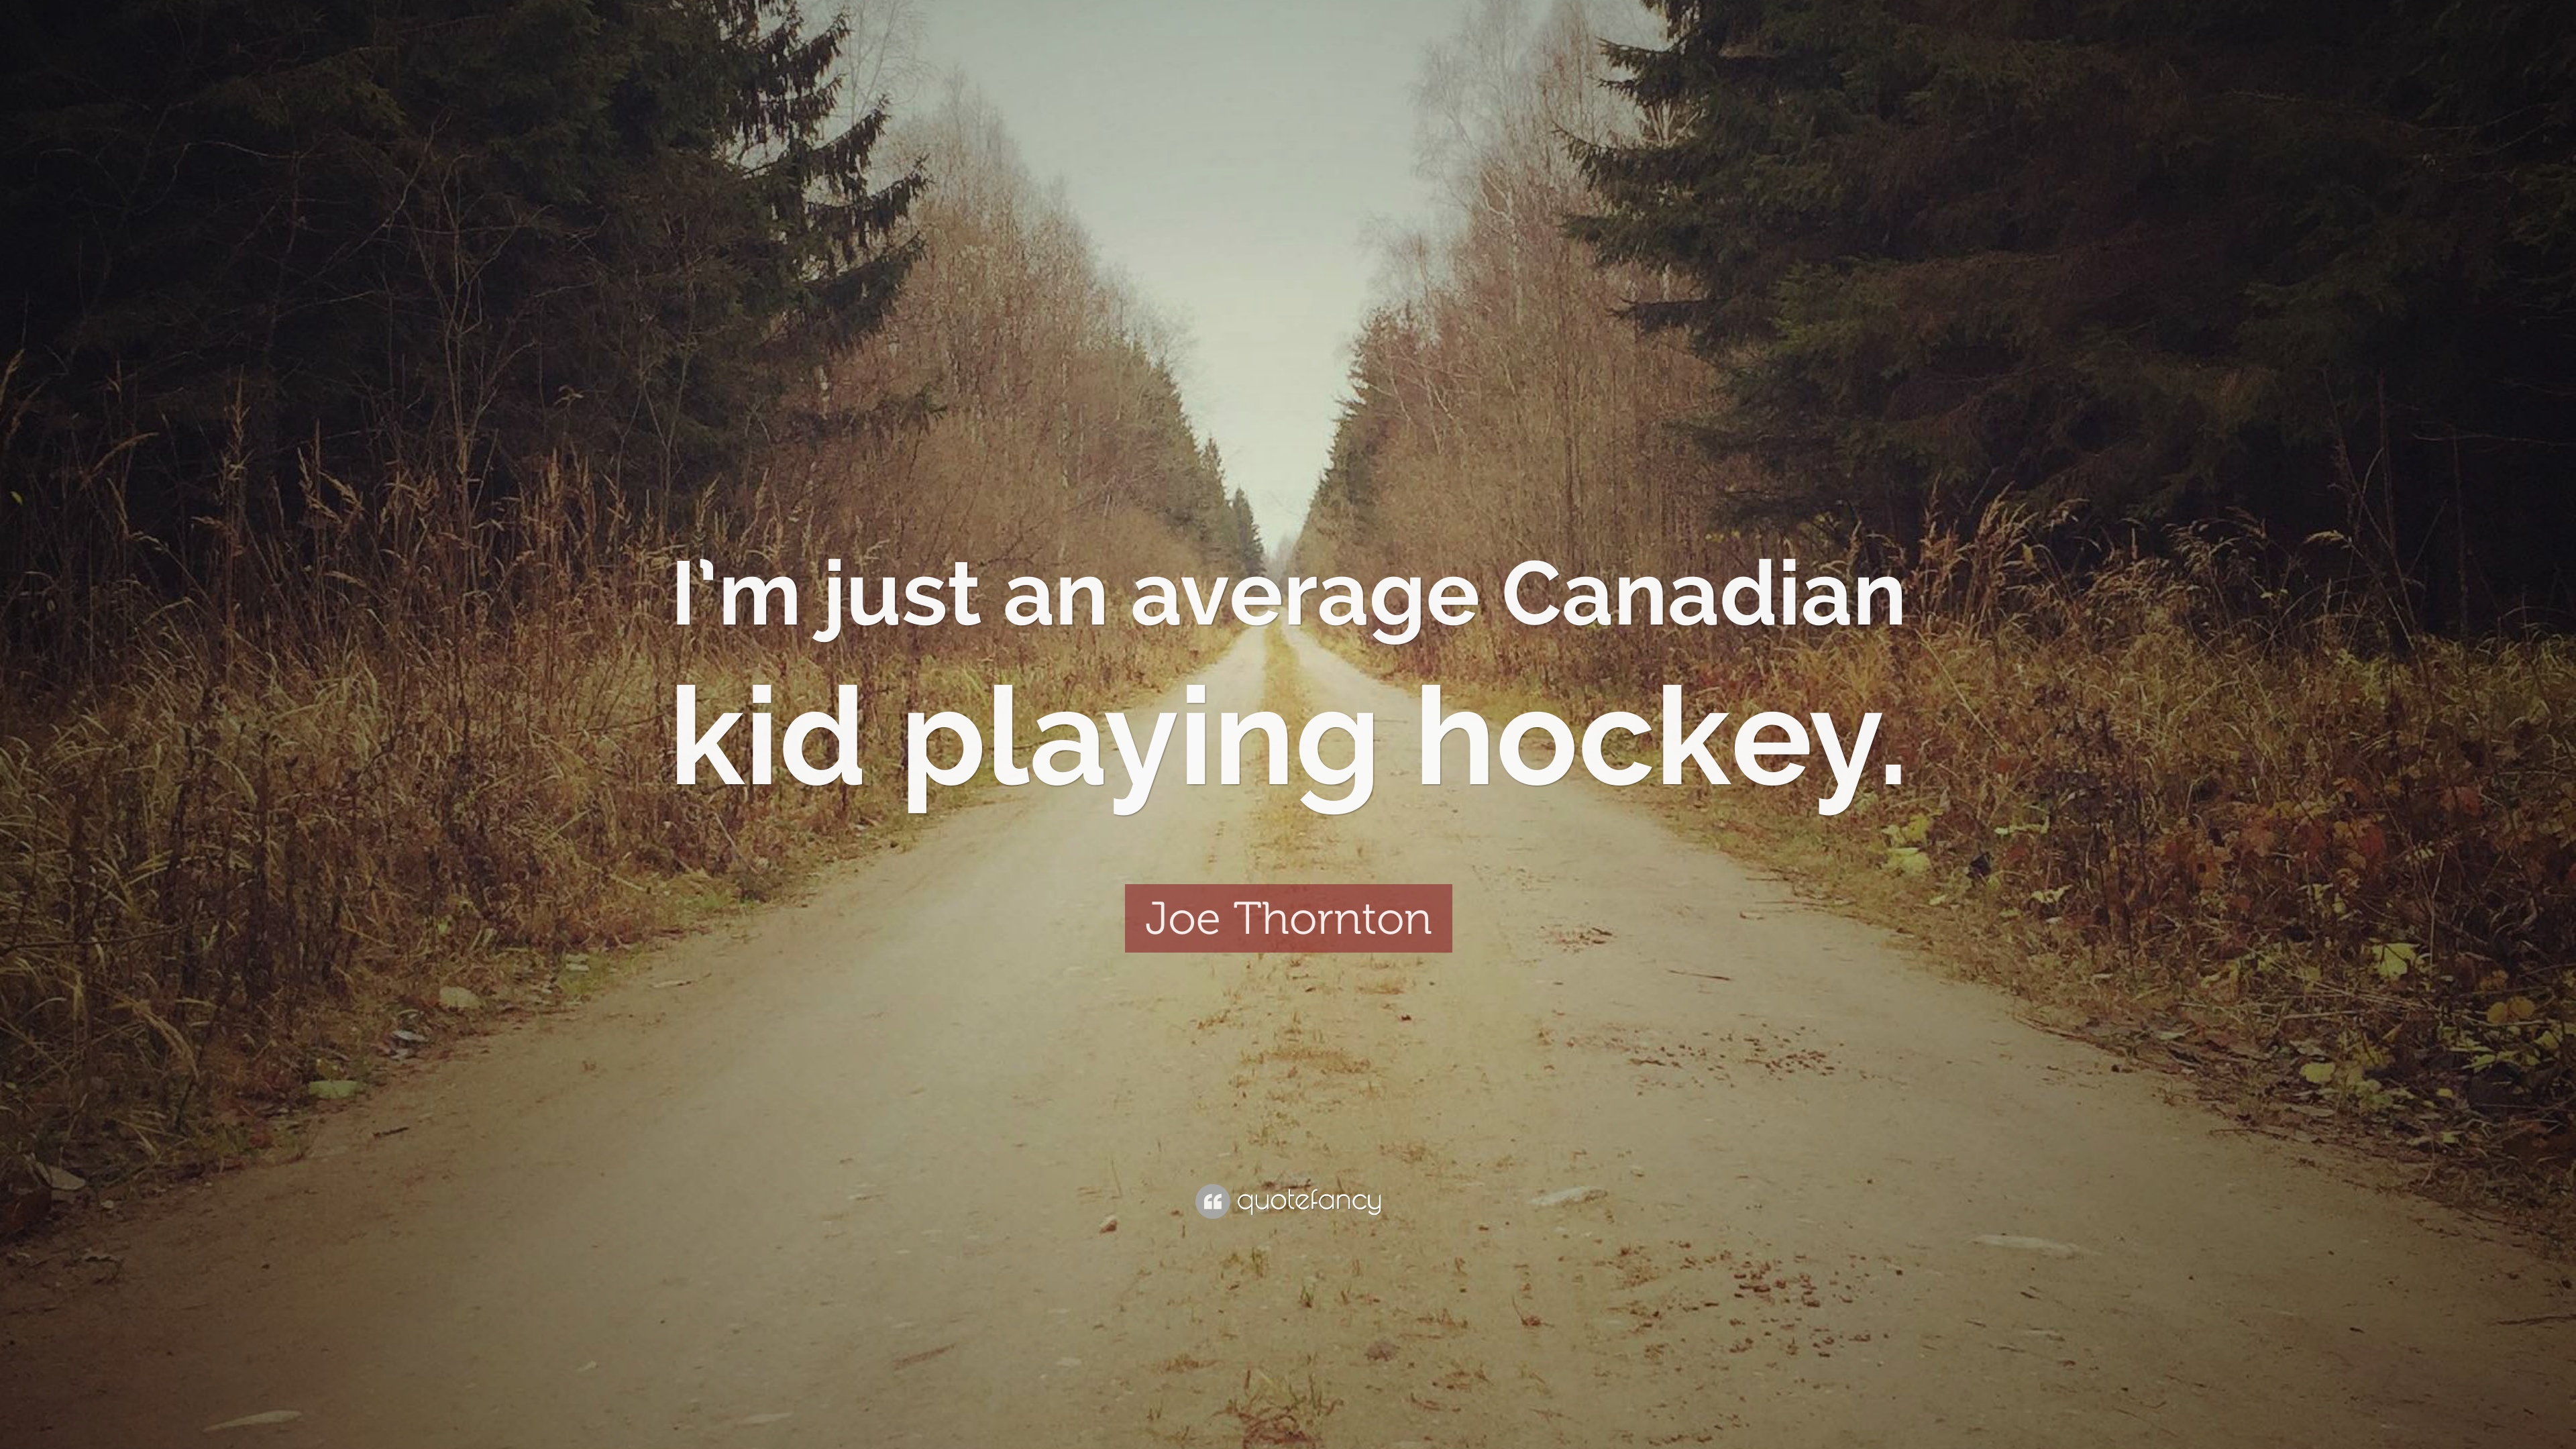 Joe Thornton Quote: “I'm just an average Canadian kid playing hockey